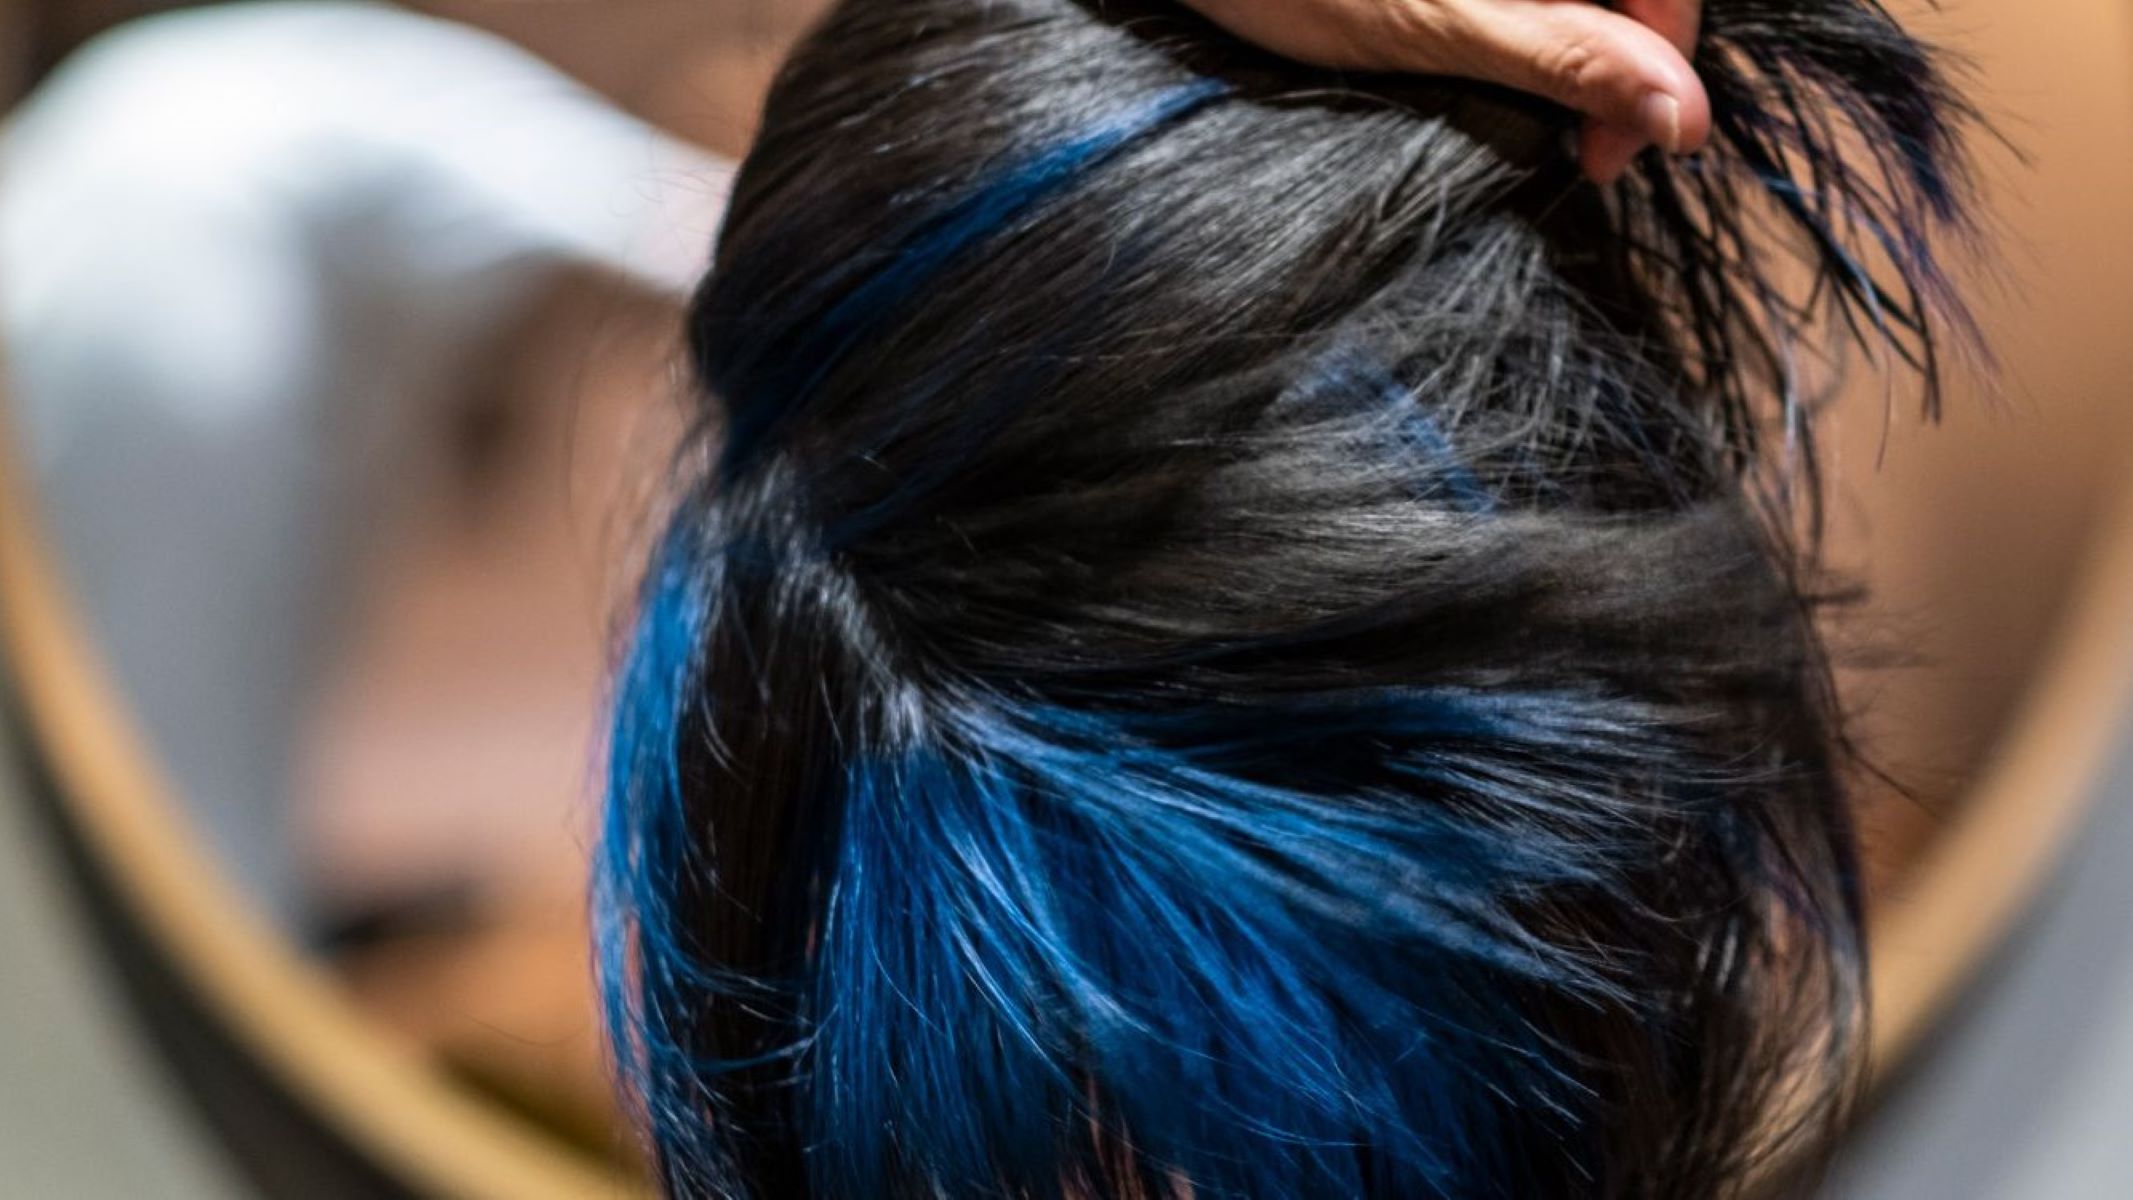 The Ultimate Blue Hair Dye For Dark Hair – No Damage Guaranteed!